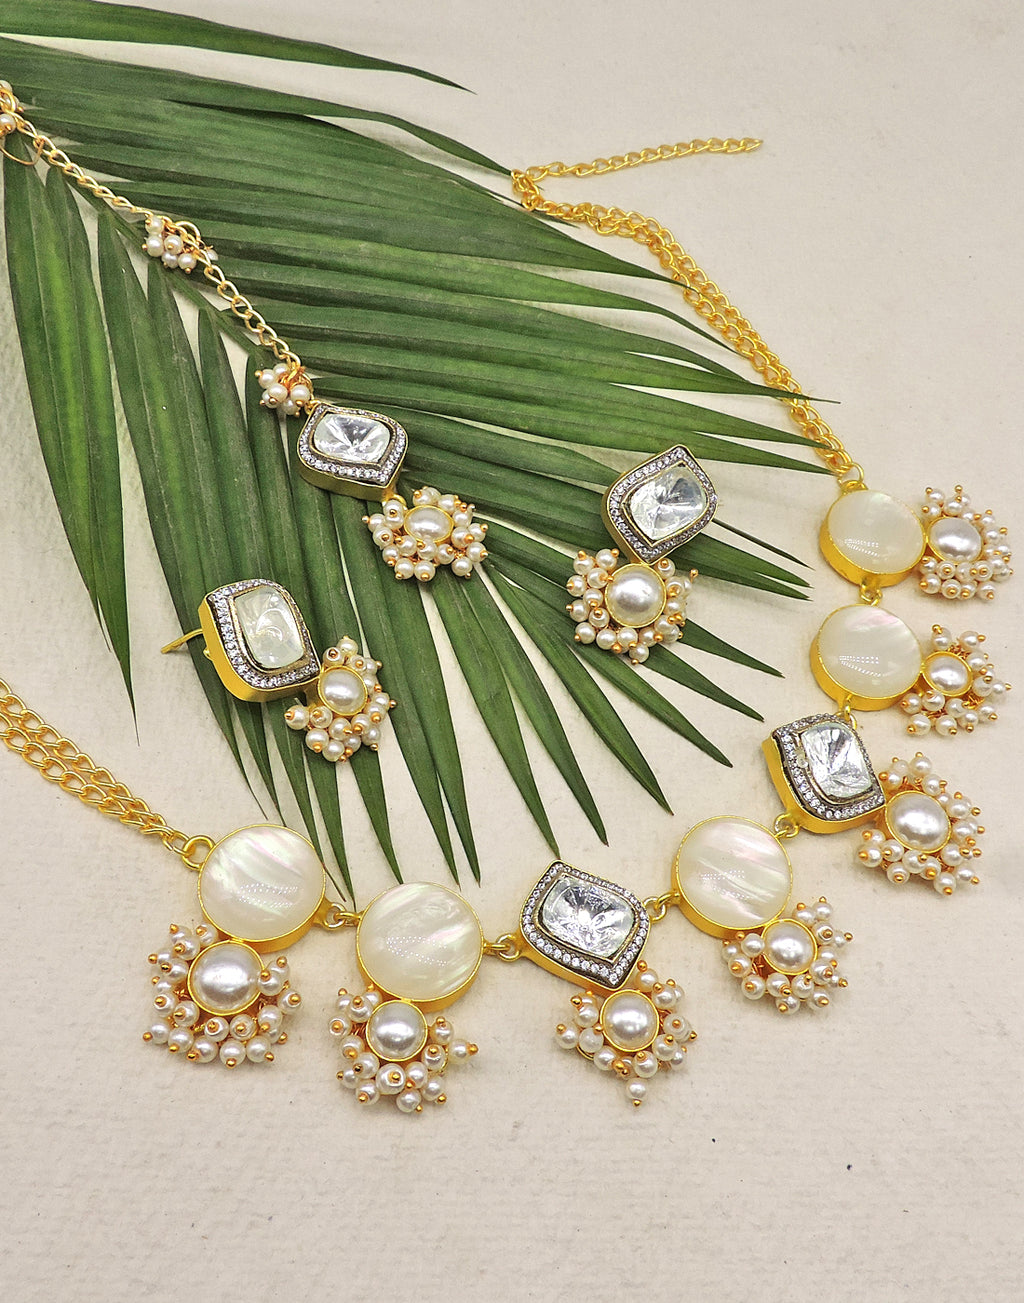 Crystal & Pearl Earrings - Statement Earrings - Gold-Plated & Hypoallergenic Jewellery - Made in India - Dubai Jewellery - Dori